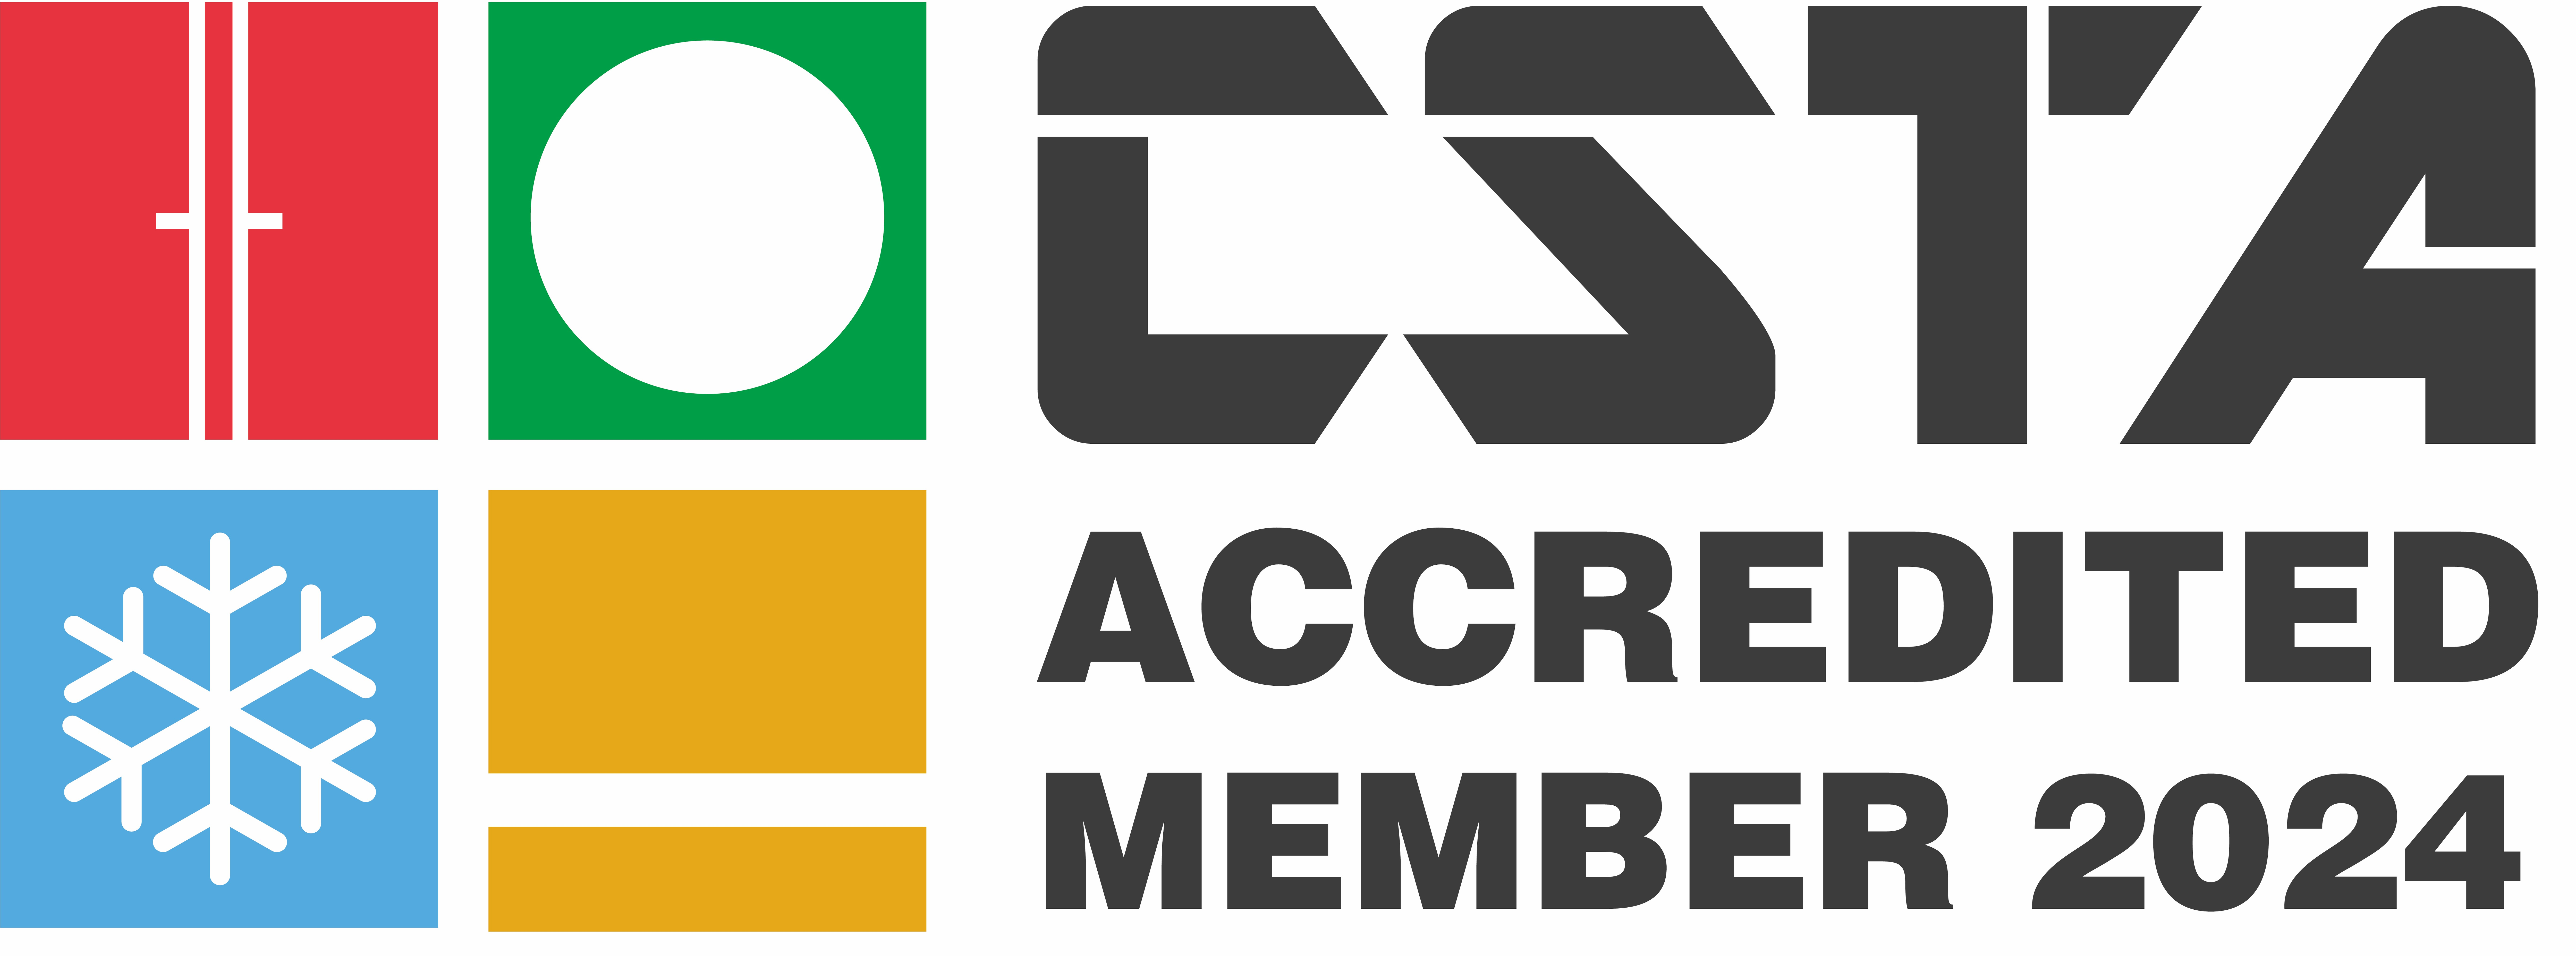 CSTA Accredited member 2024 logo